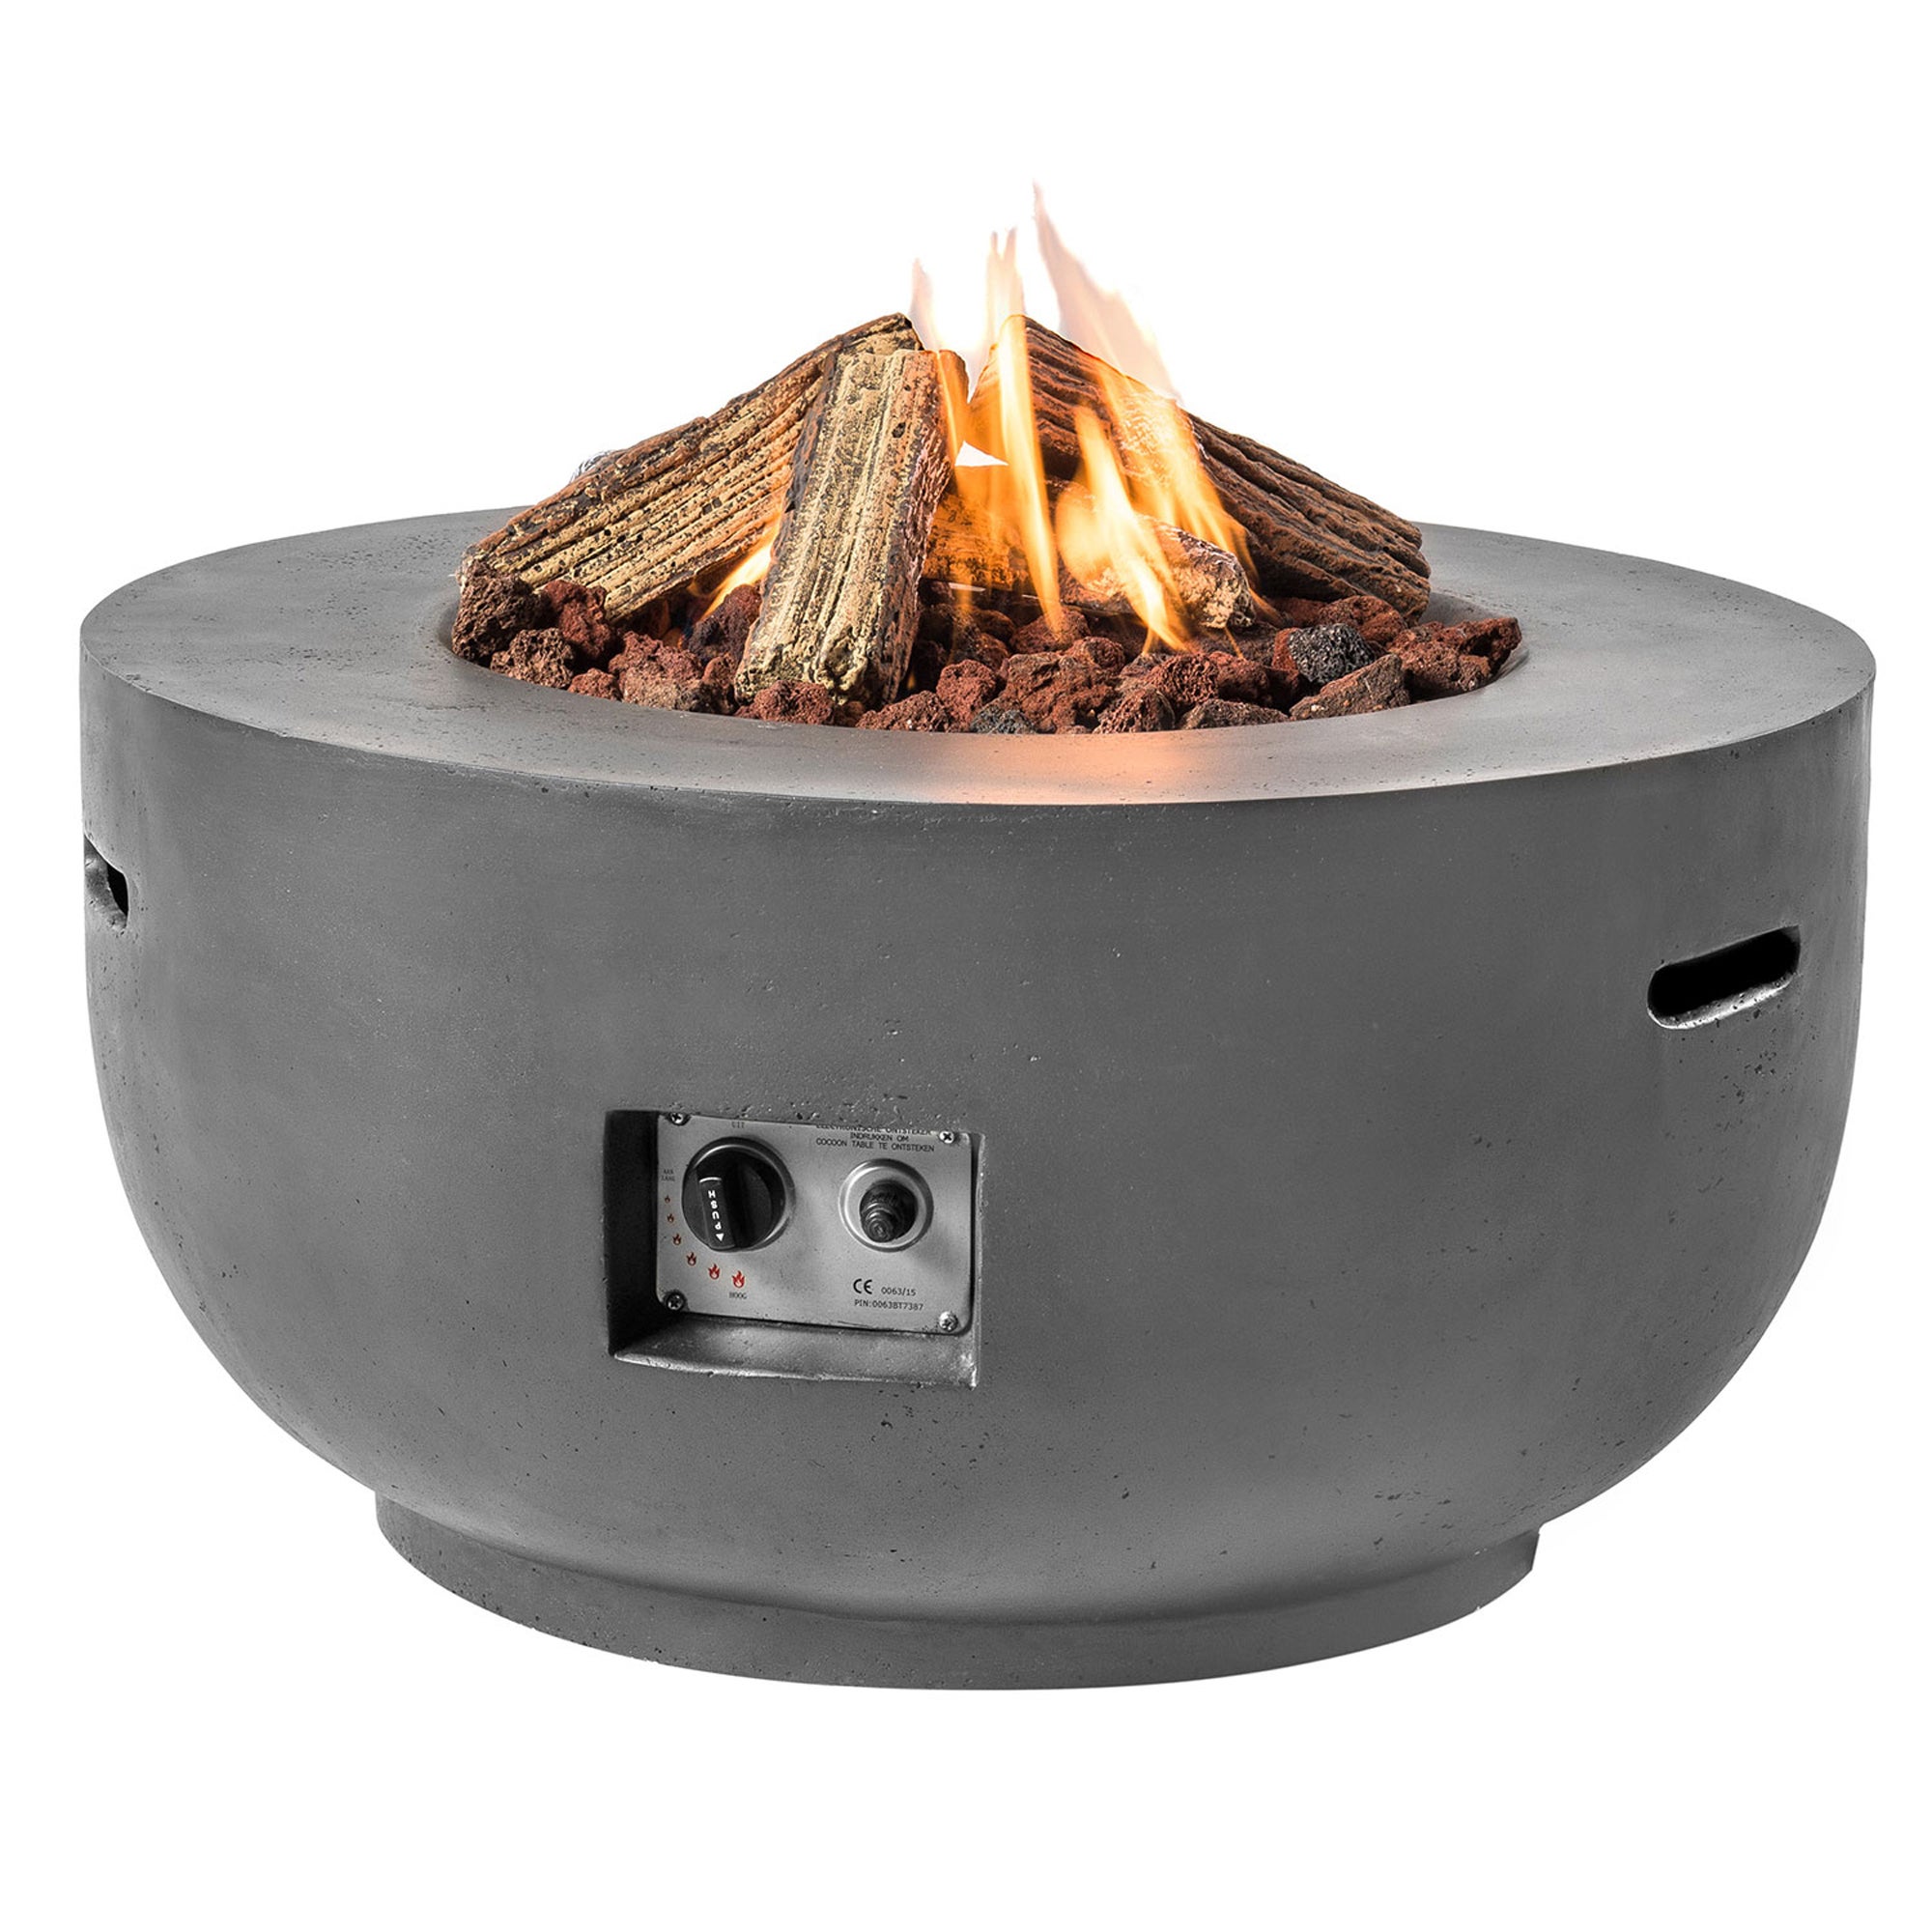 Grey Fire Pit Bowl Grey